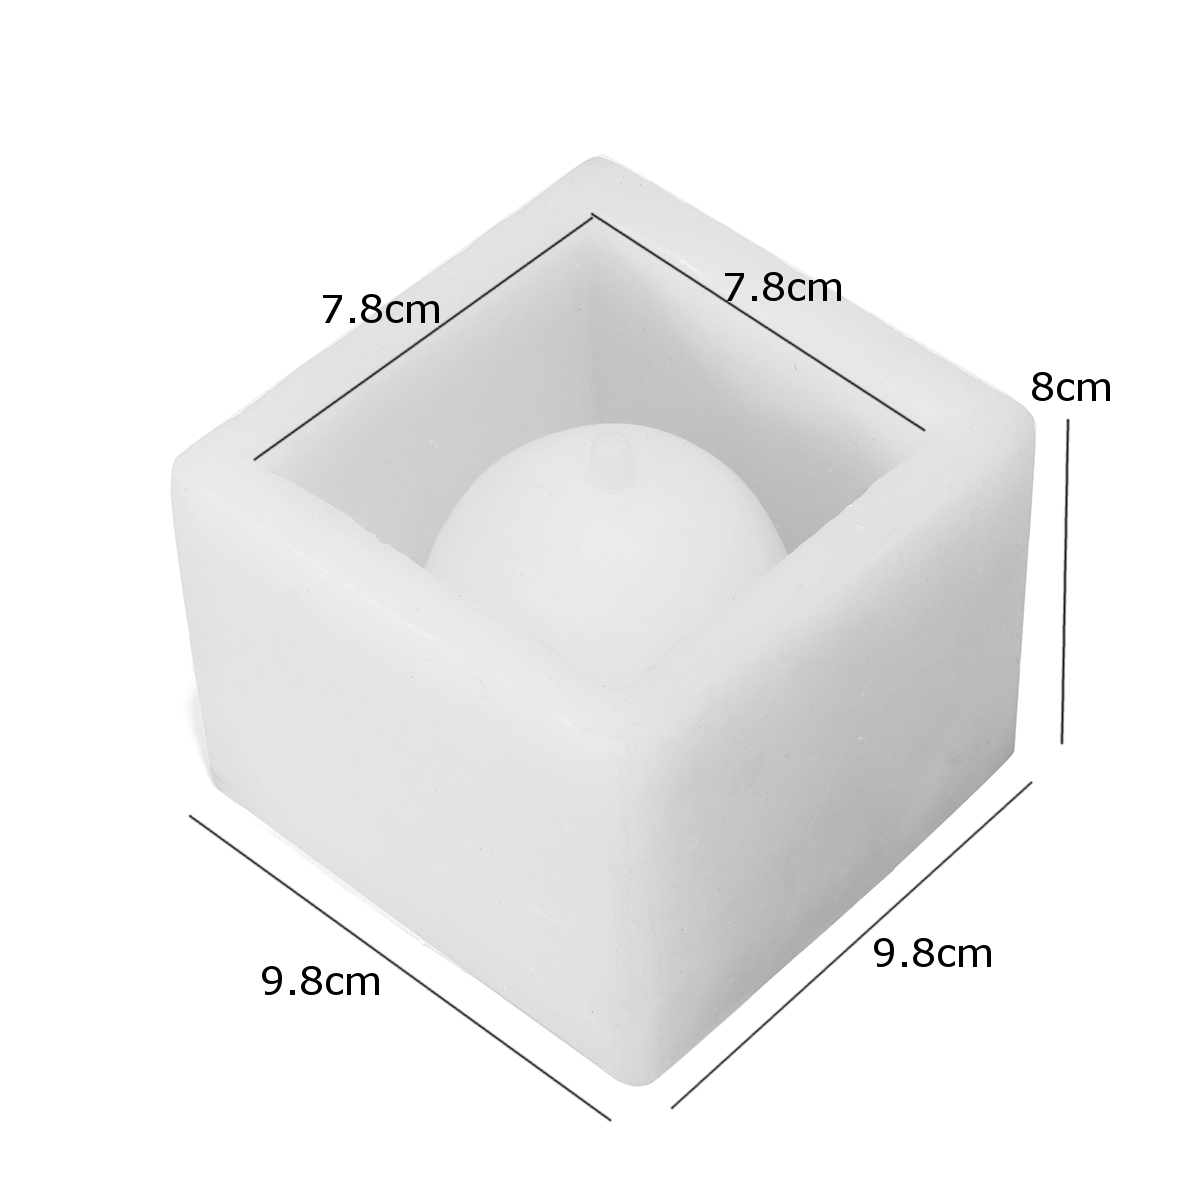 Cube-Silicone-Mold-DIY-Concrete-Flower-Pot-Garden-Planter-Vase-Mould-Craft-Handmade-Tool-1332144